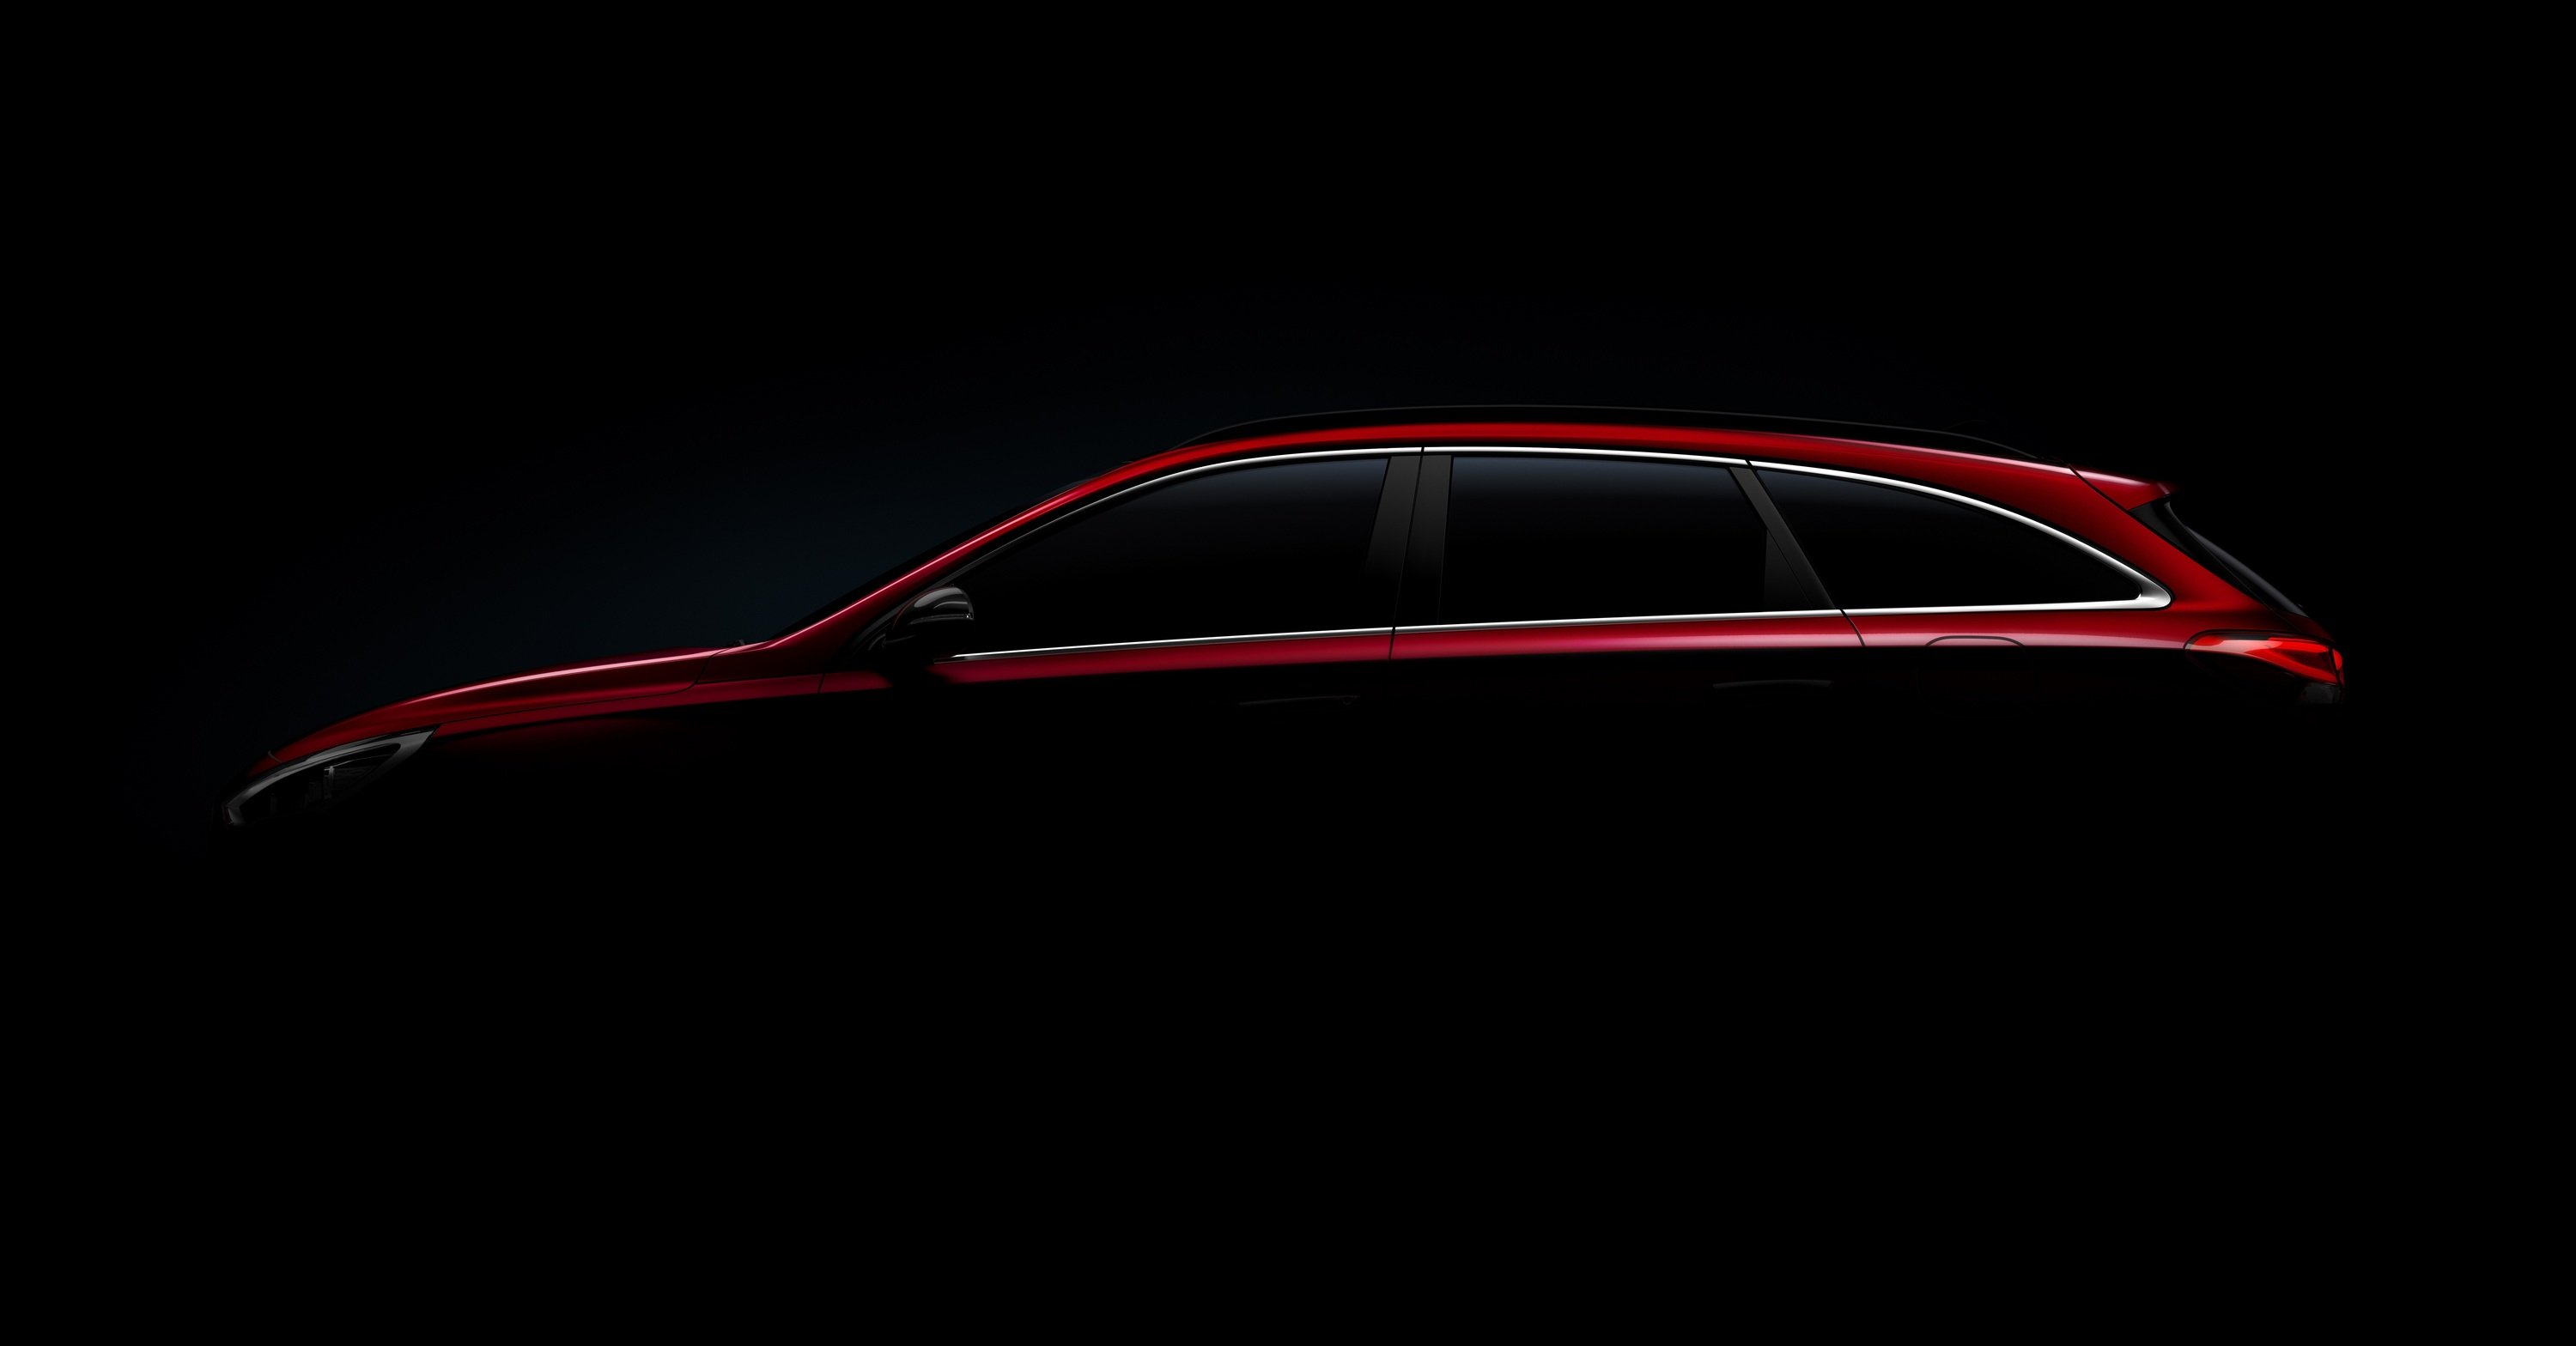 Nuova Hyundai i30 wagon, il primo teaser